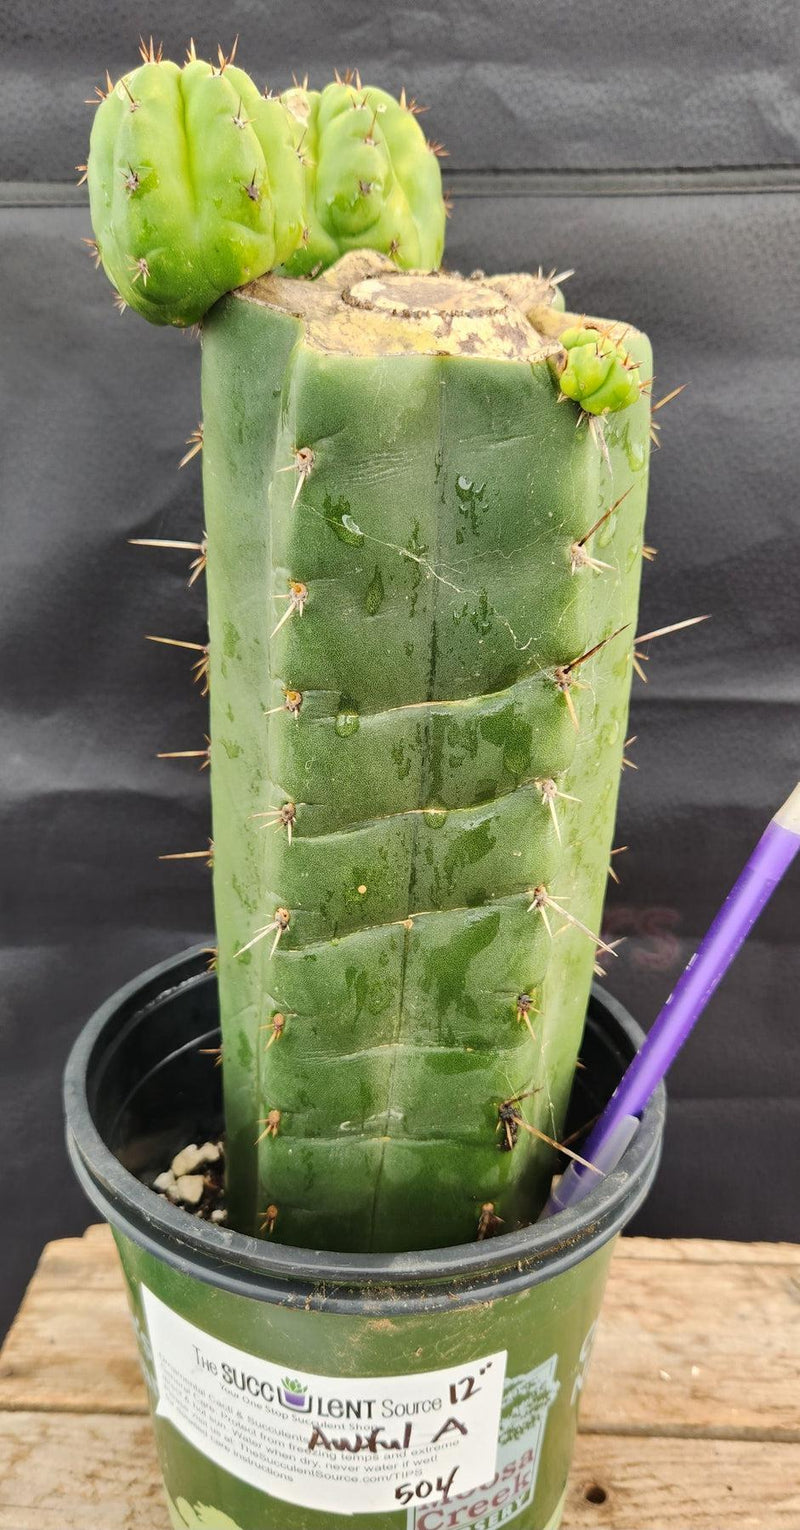 #EC157 EXACT Trichocereus Pachanoi "Awful" Cactus Various sizes